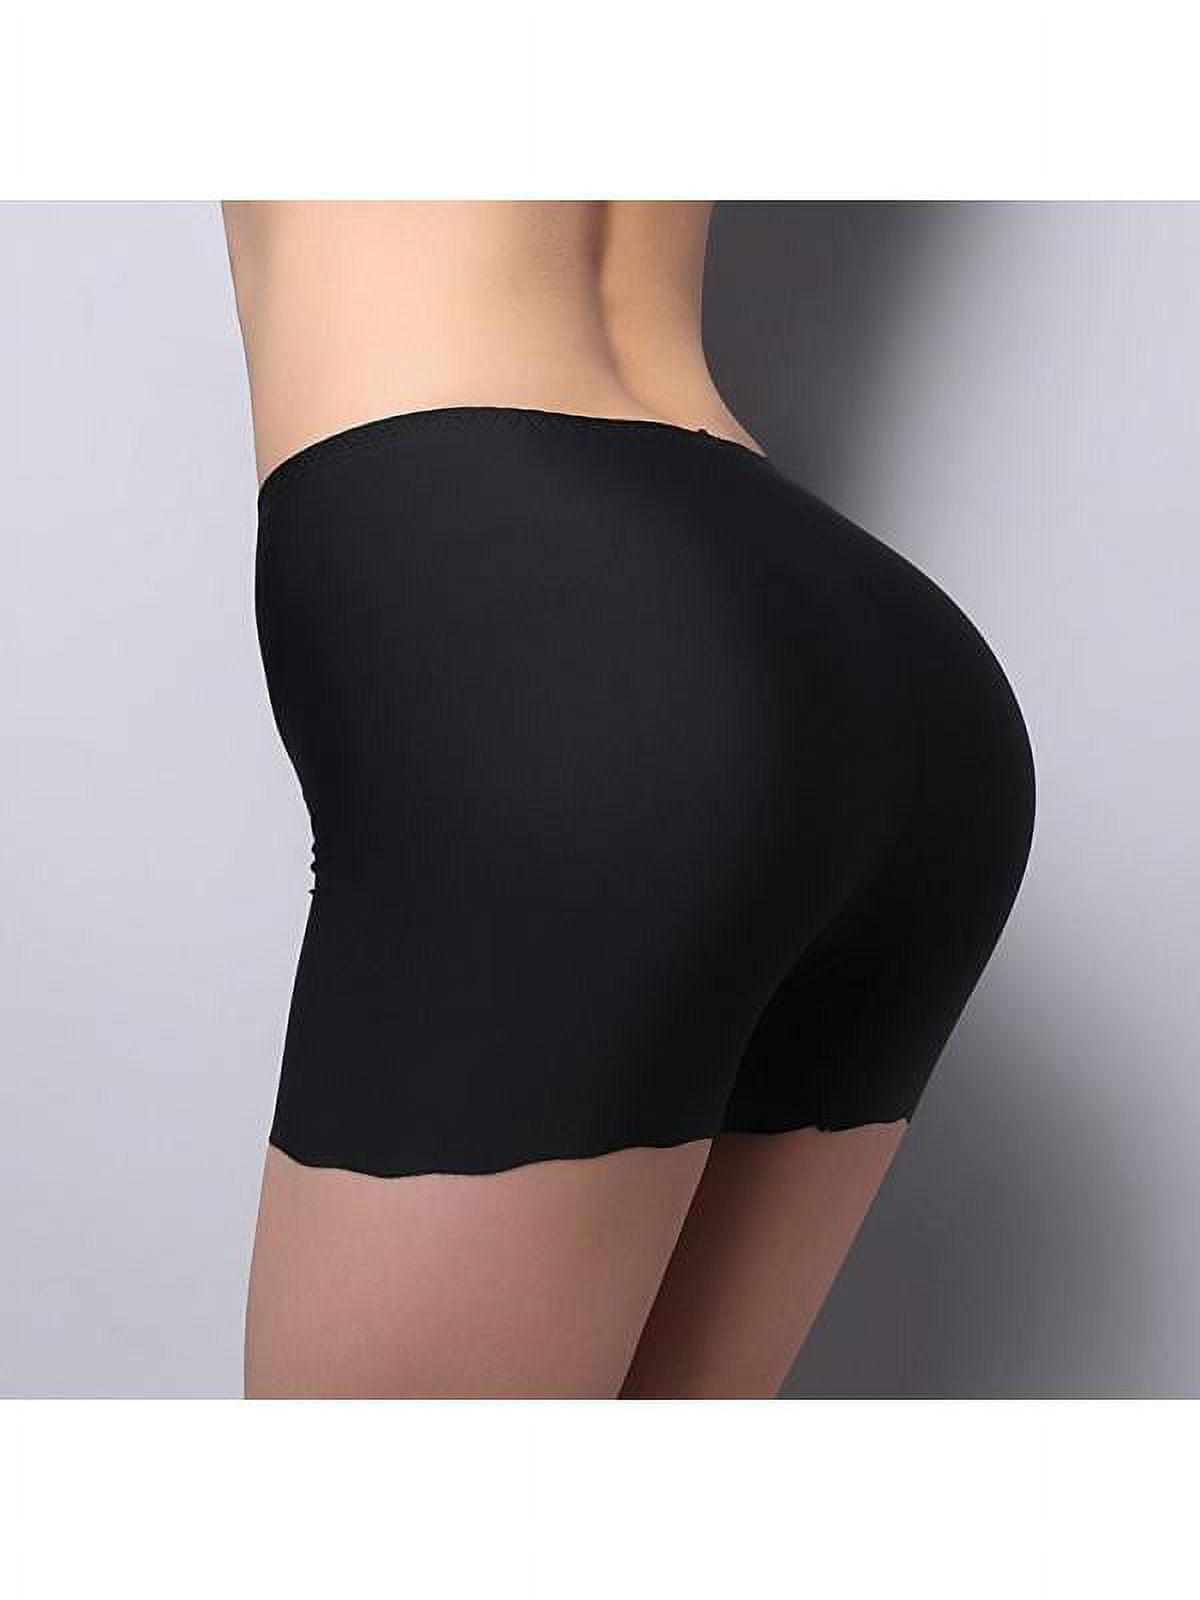 aaron arzu recommends panties under skirt pic